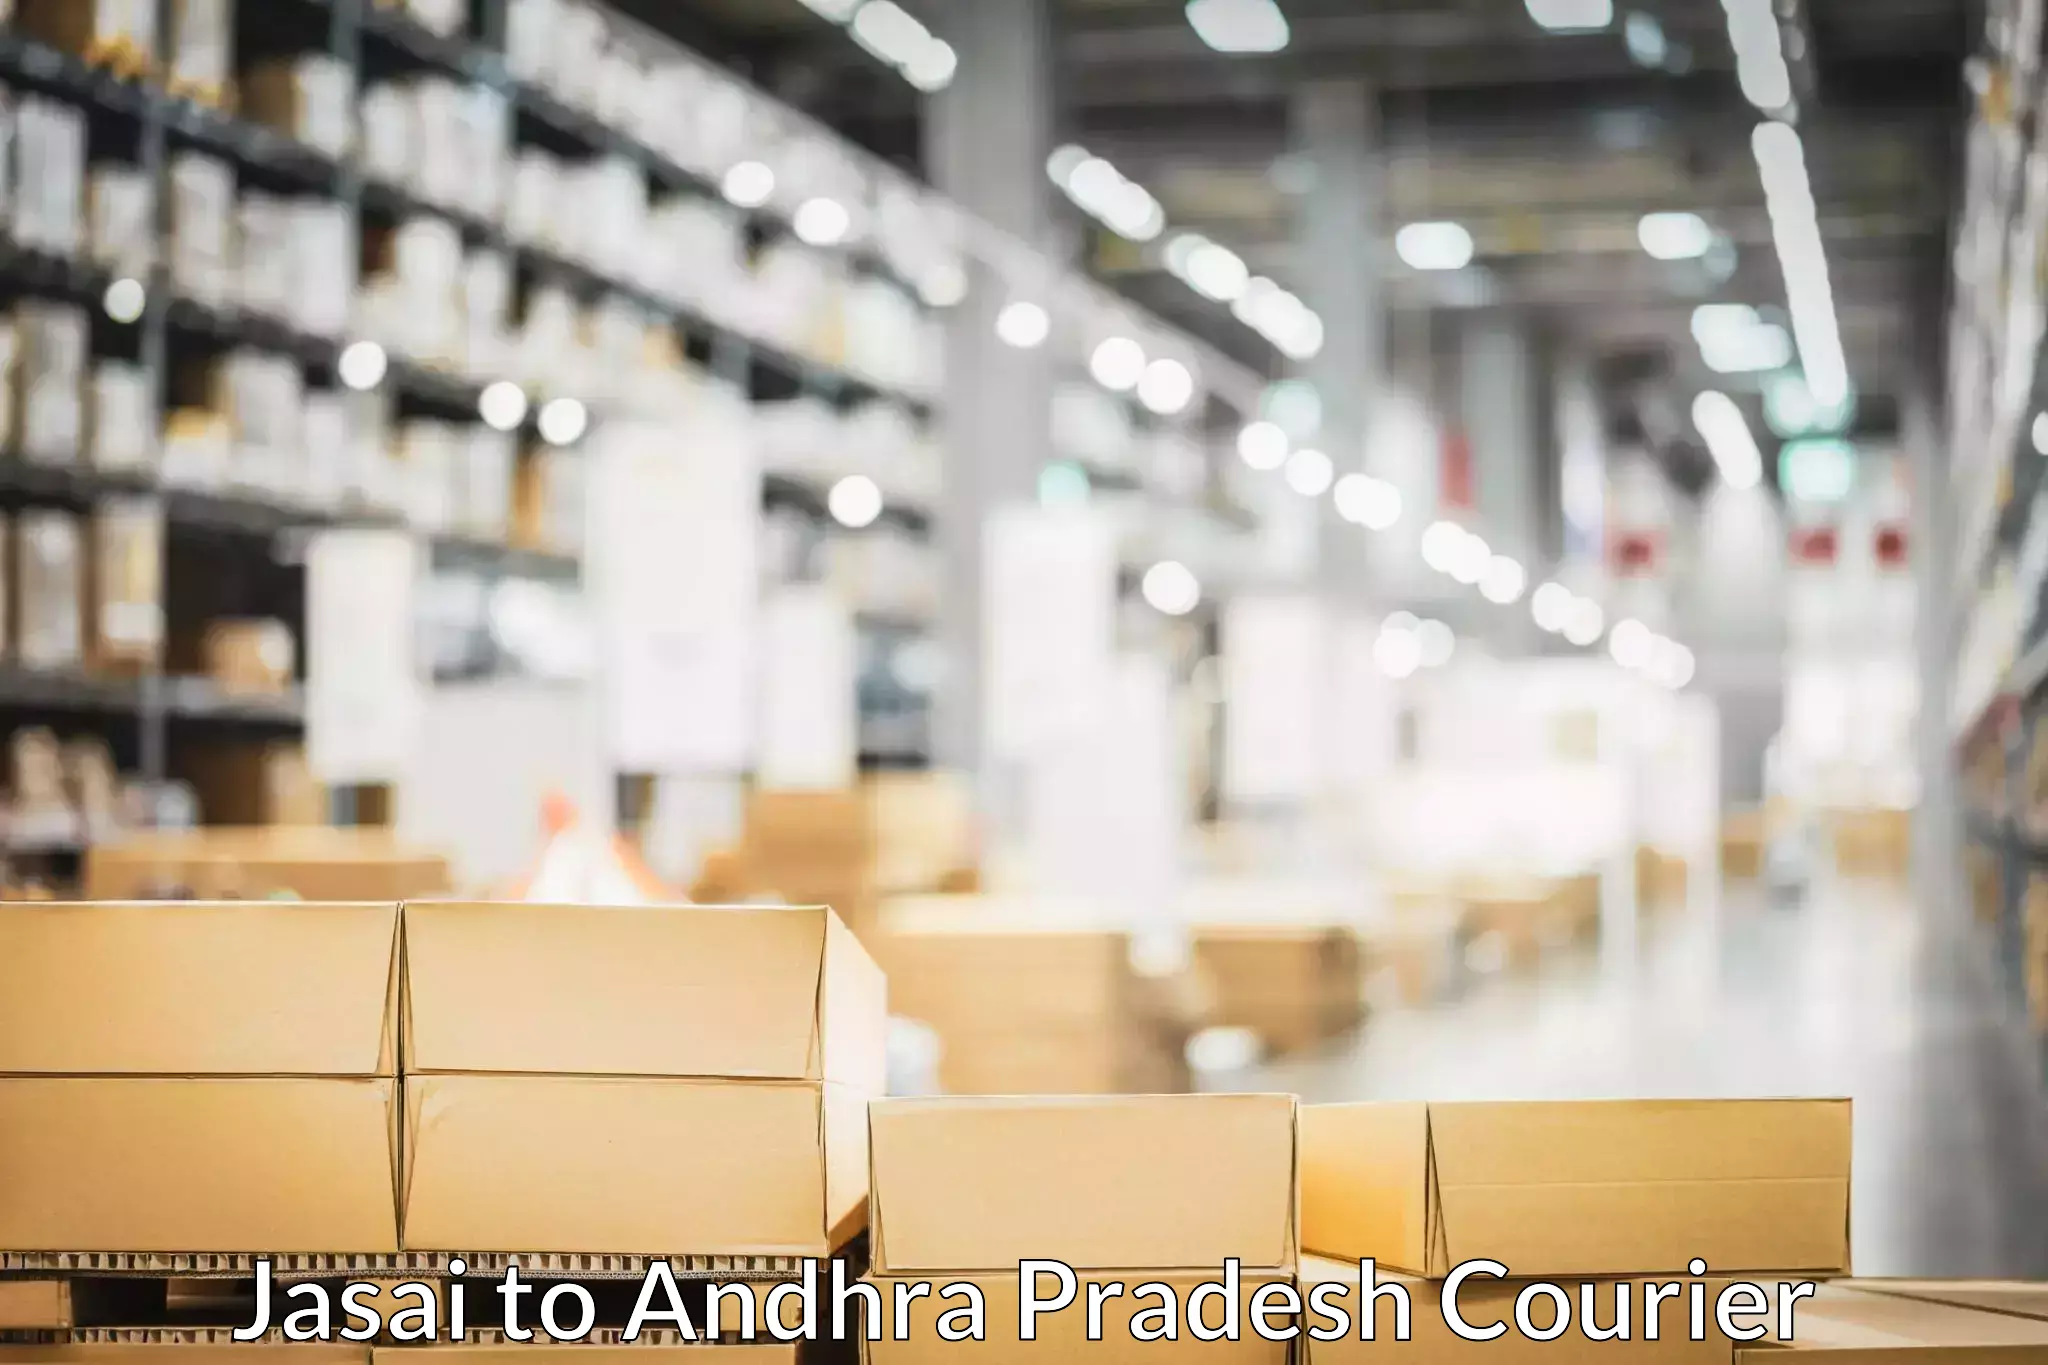 Moving and packing experts Jasai to Andhra Pradesh